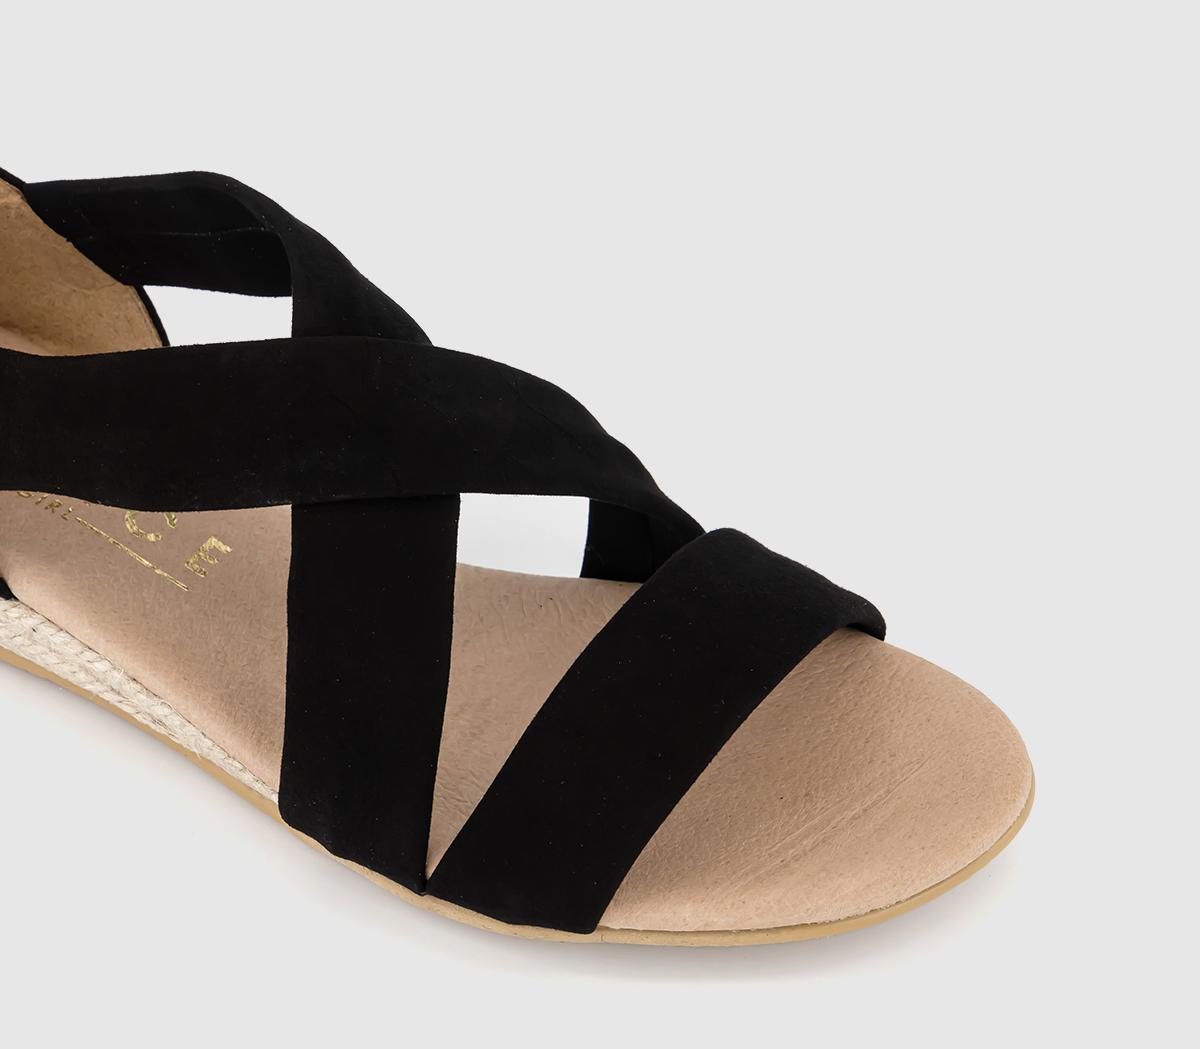 Office Hallie Cross Strap Espadrilles Sandals Black Suede - Women’s Sandals